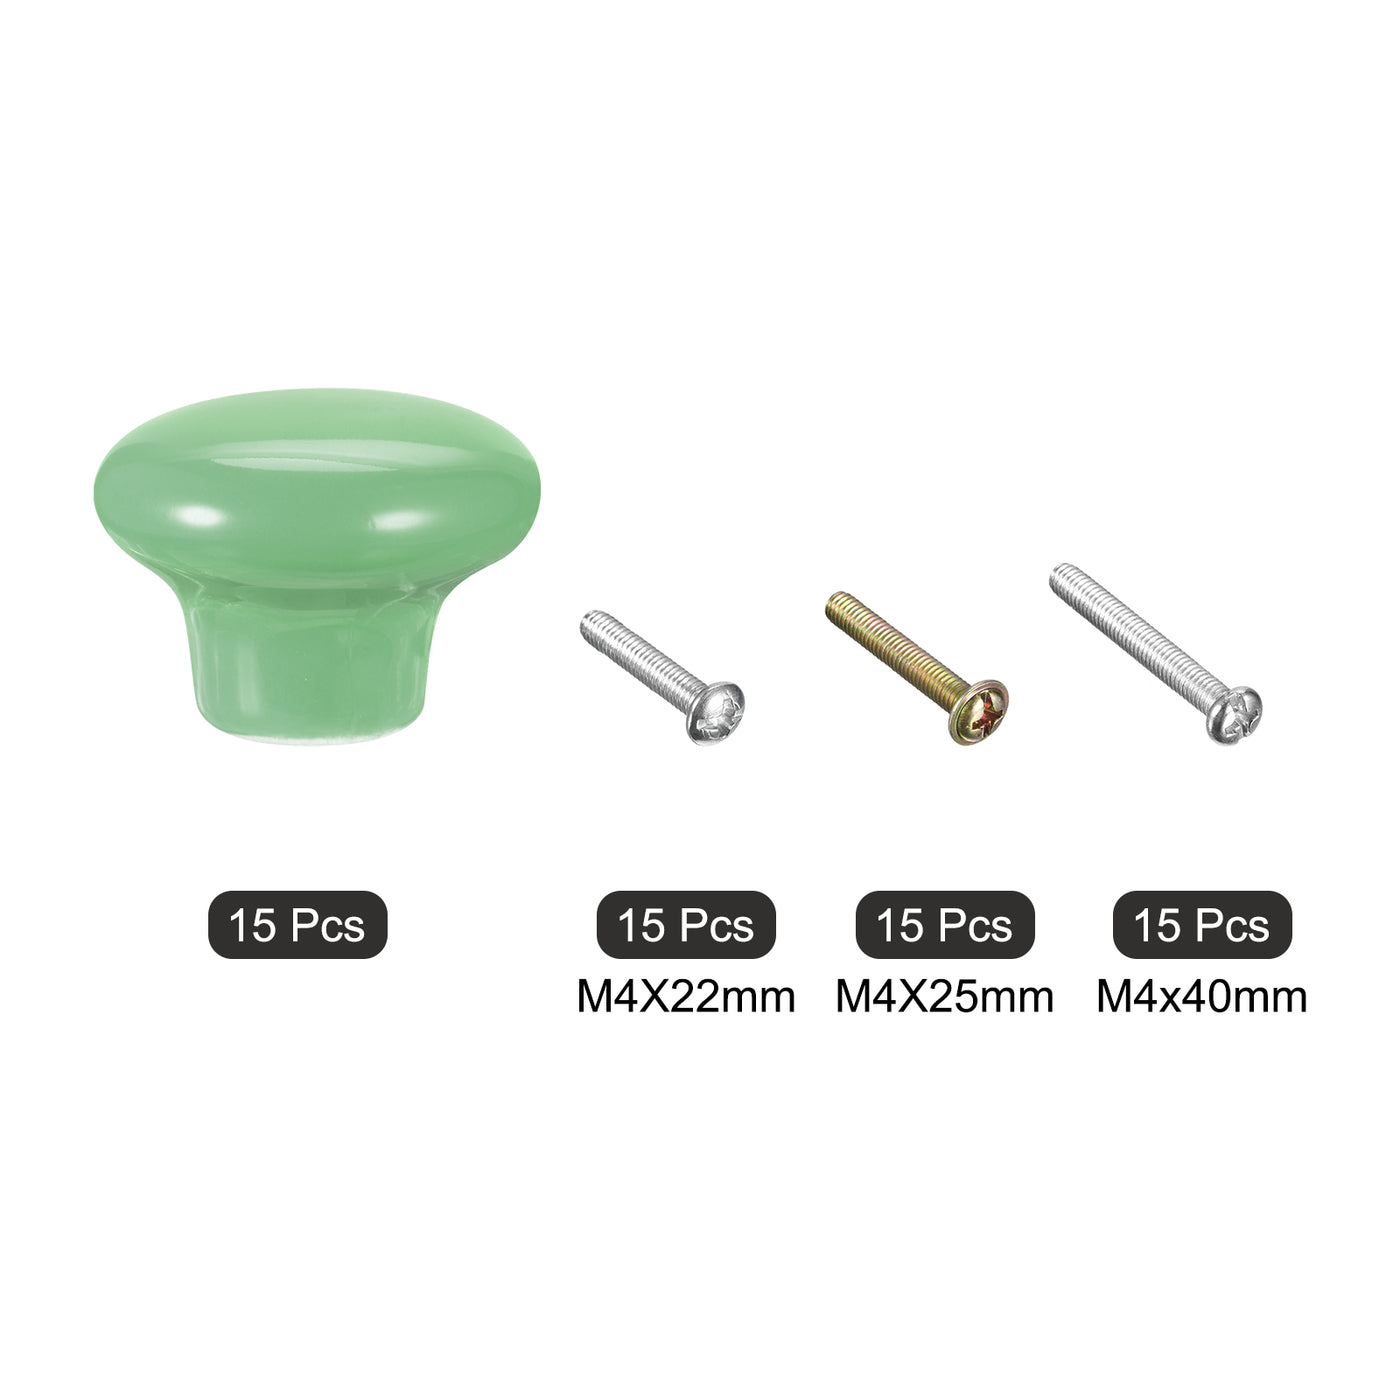 uxcell Uxcell Ceramic Drawer Knobs 15pcs Mushroom Shape Pulls 0.94"x1.26" for Dresser(Green)